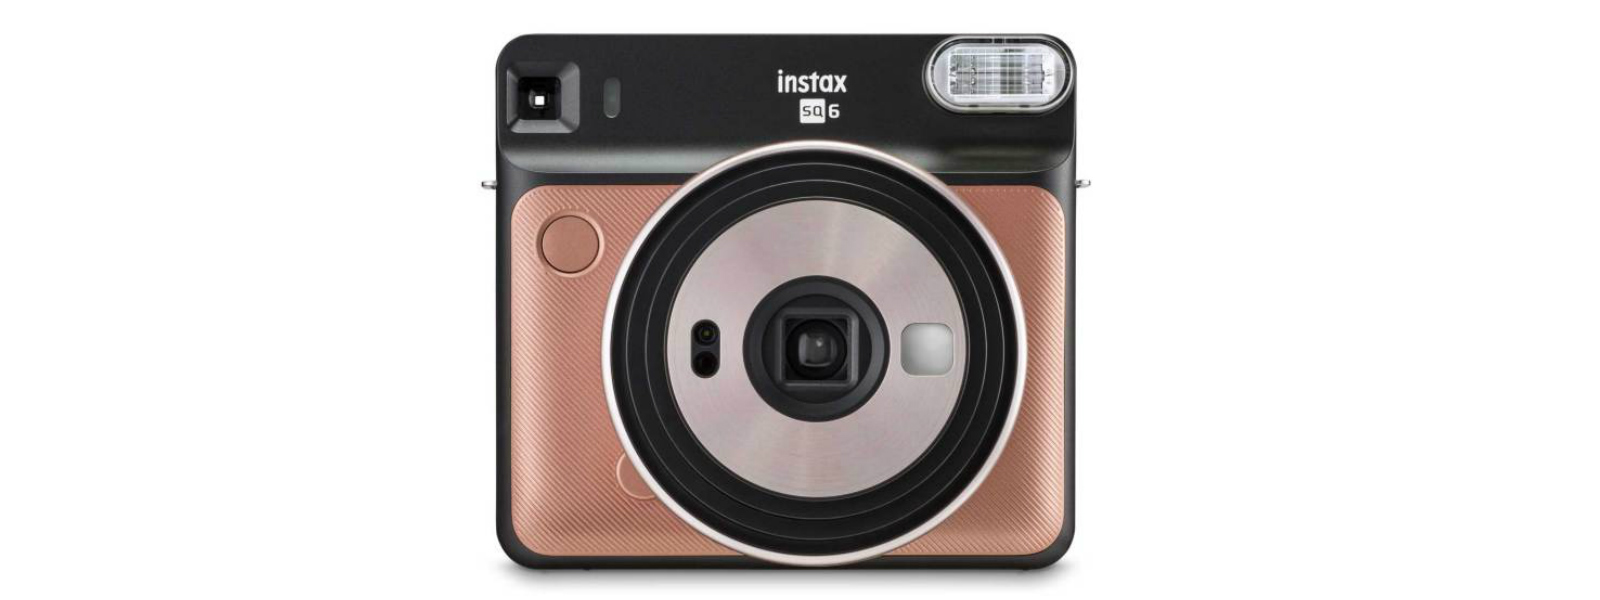 Fujifilm unveils analog Instax camera